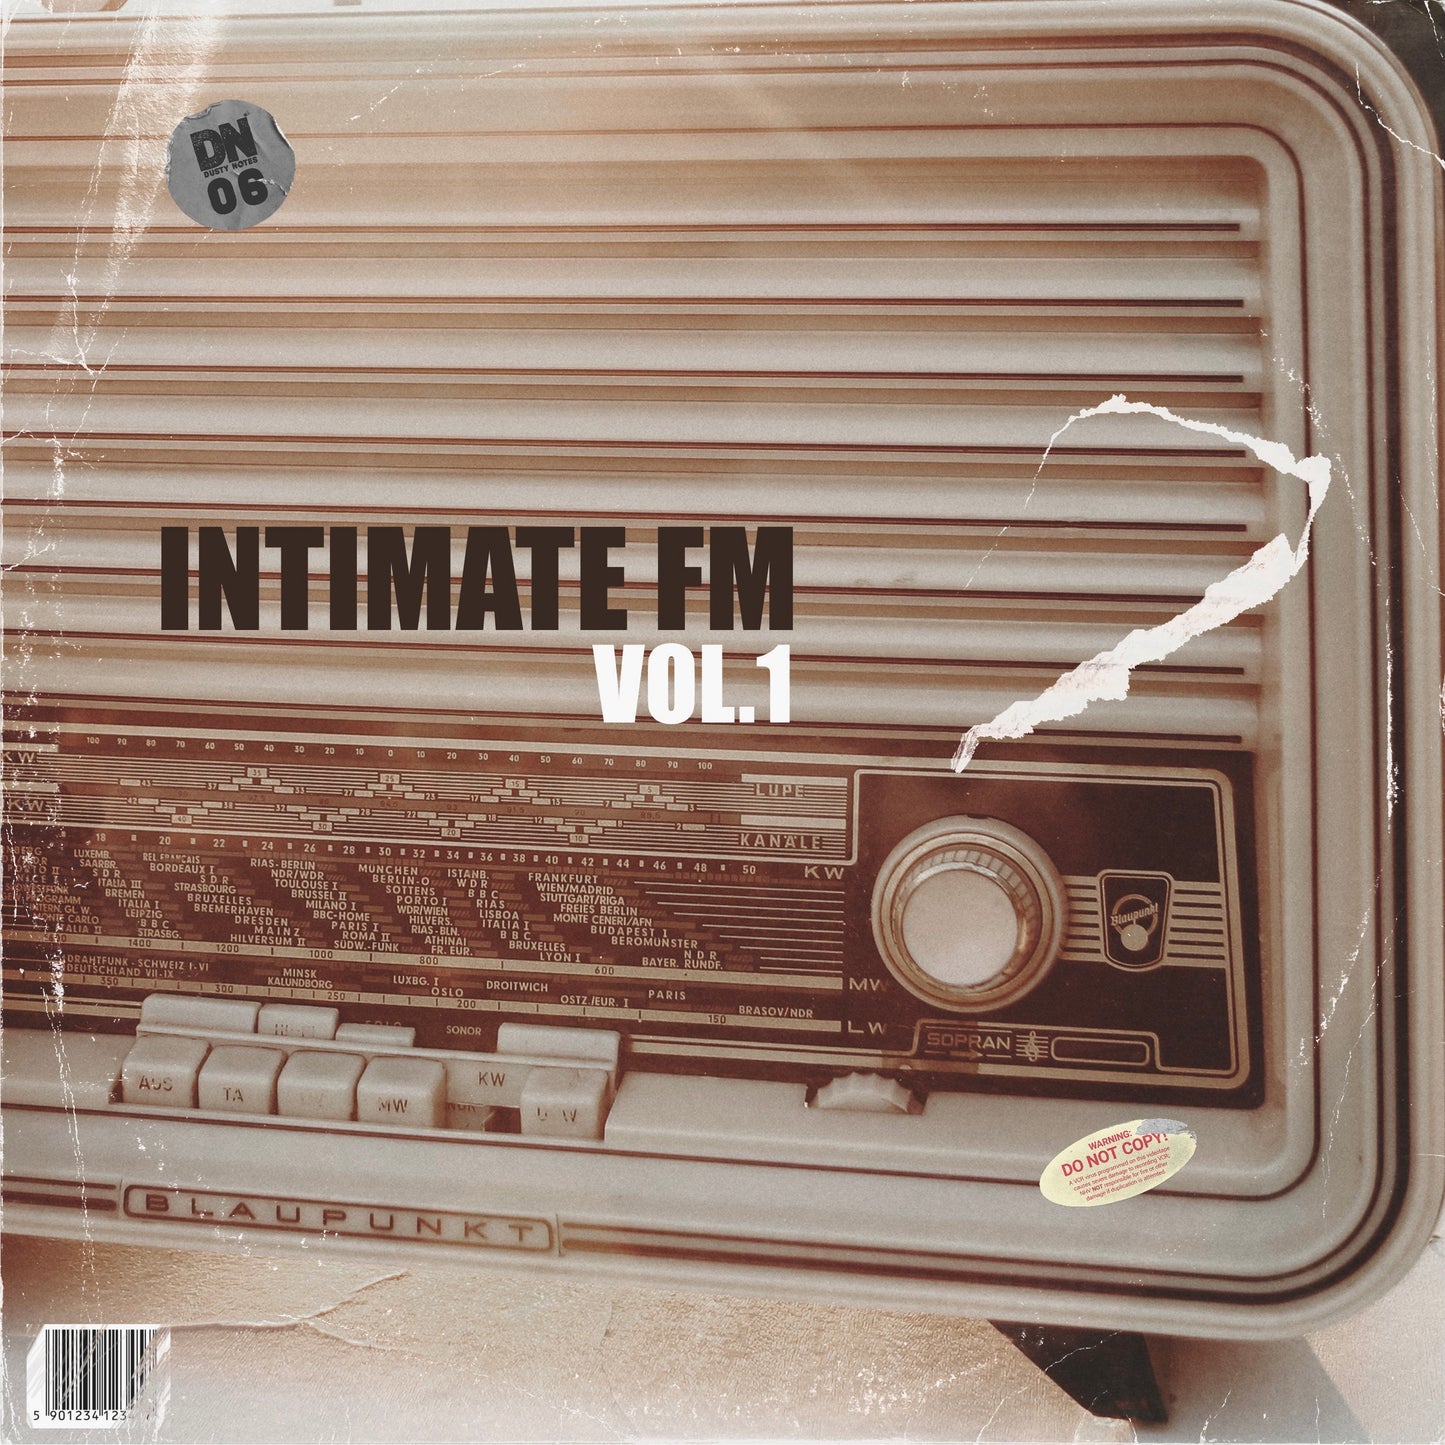 INTIMATE FM VOL.1